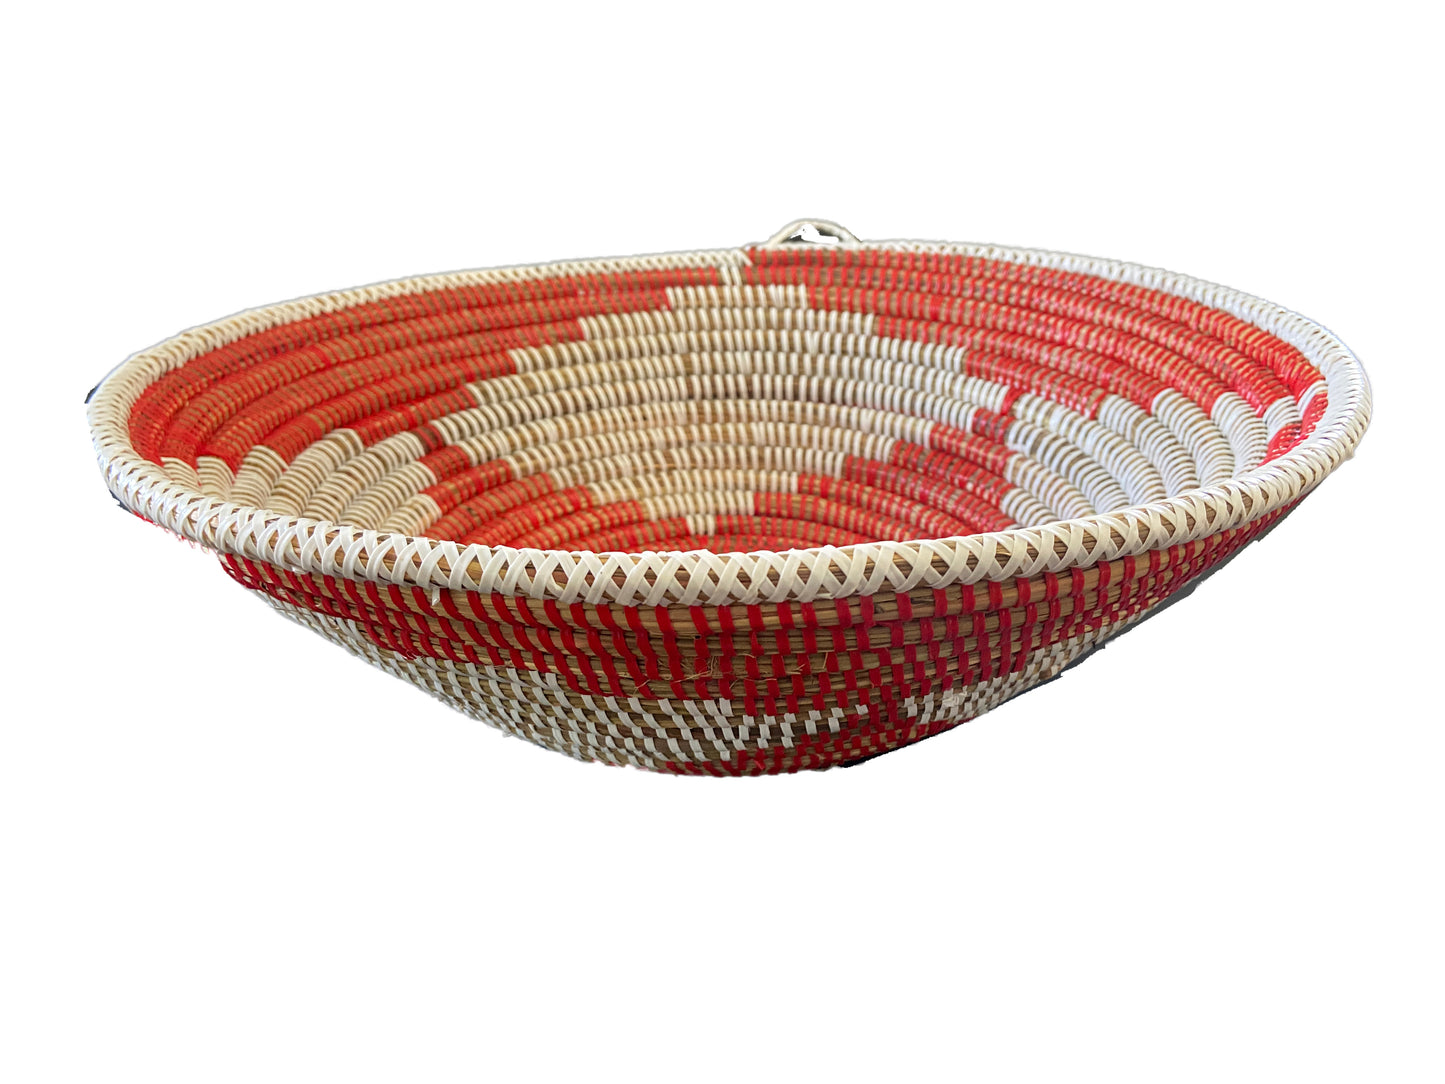 #3474 Lg Handmade Woven Wolof Basket From Senegal 16" in D